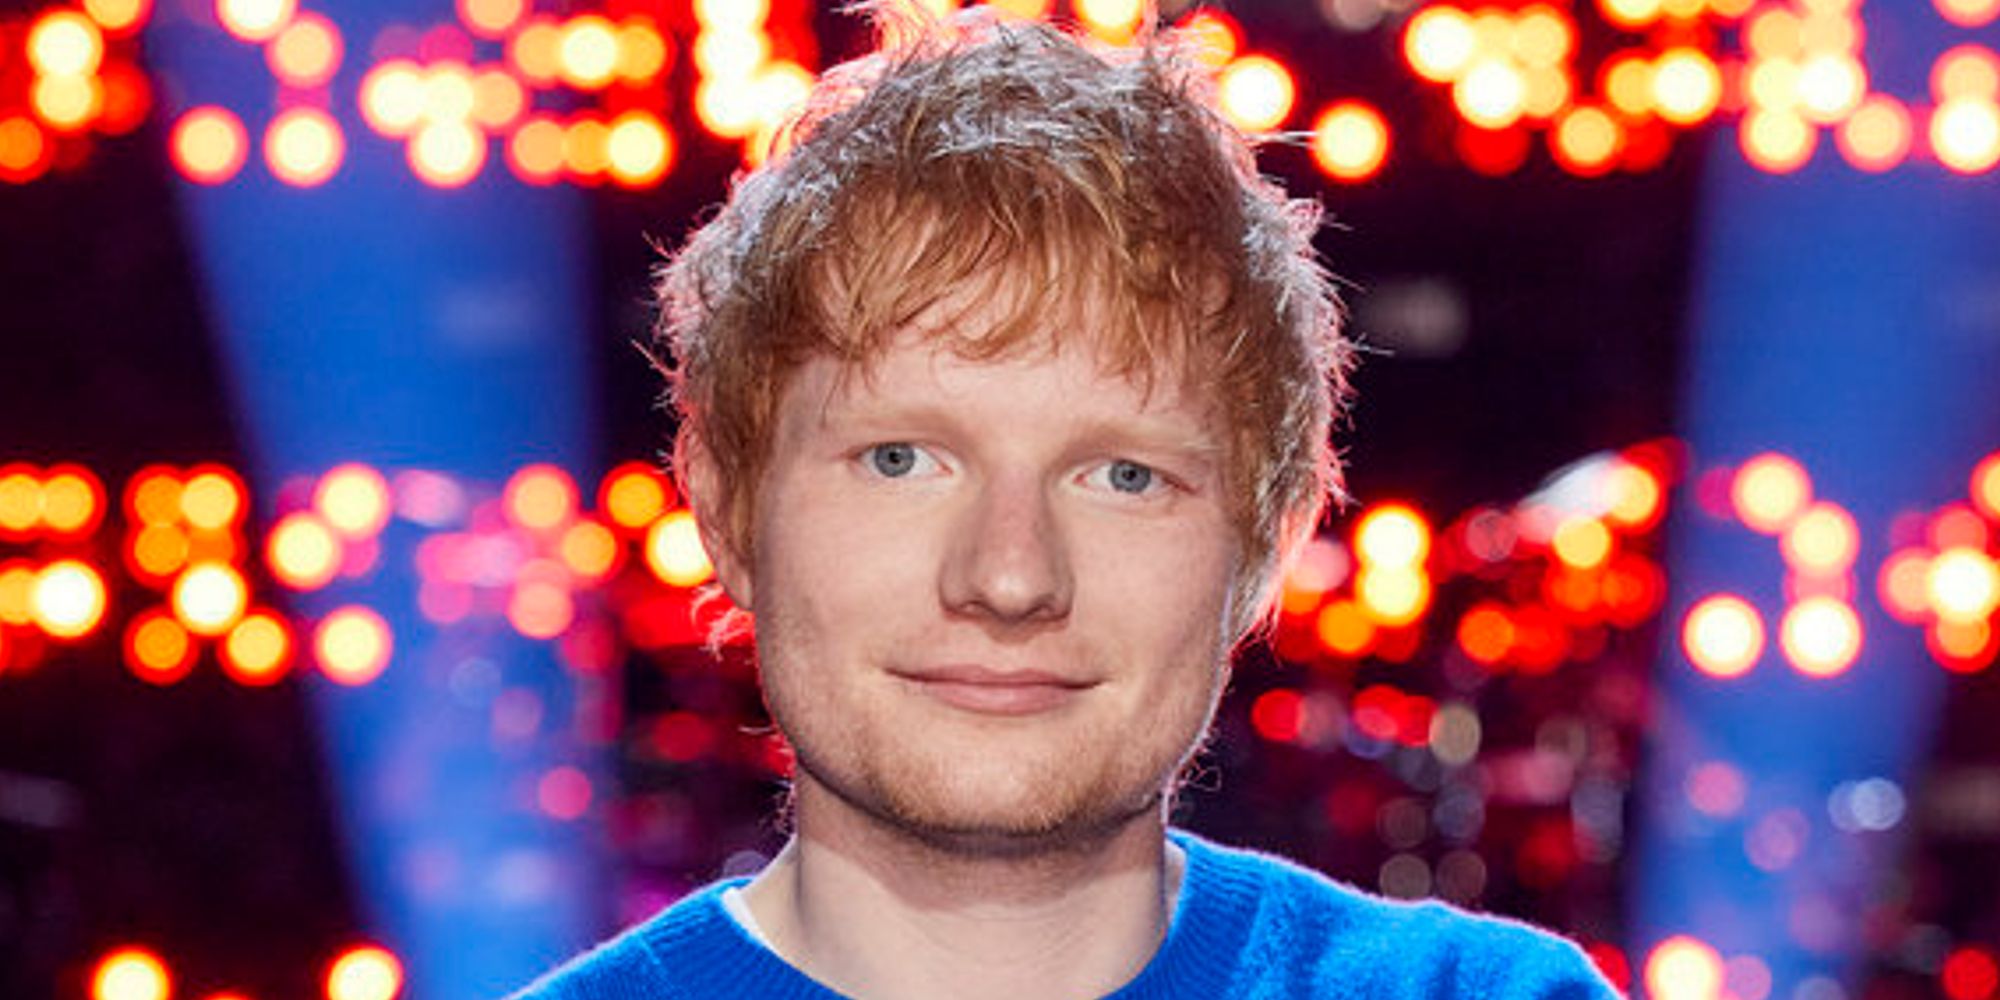 Ed-Sheeran-on-The-Voice-season-21.jpg